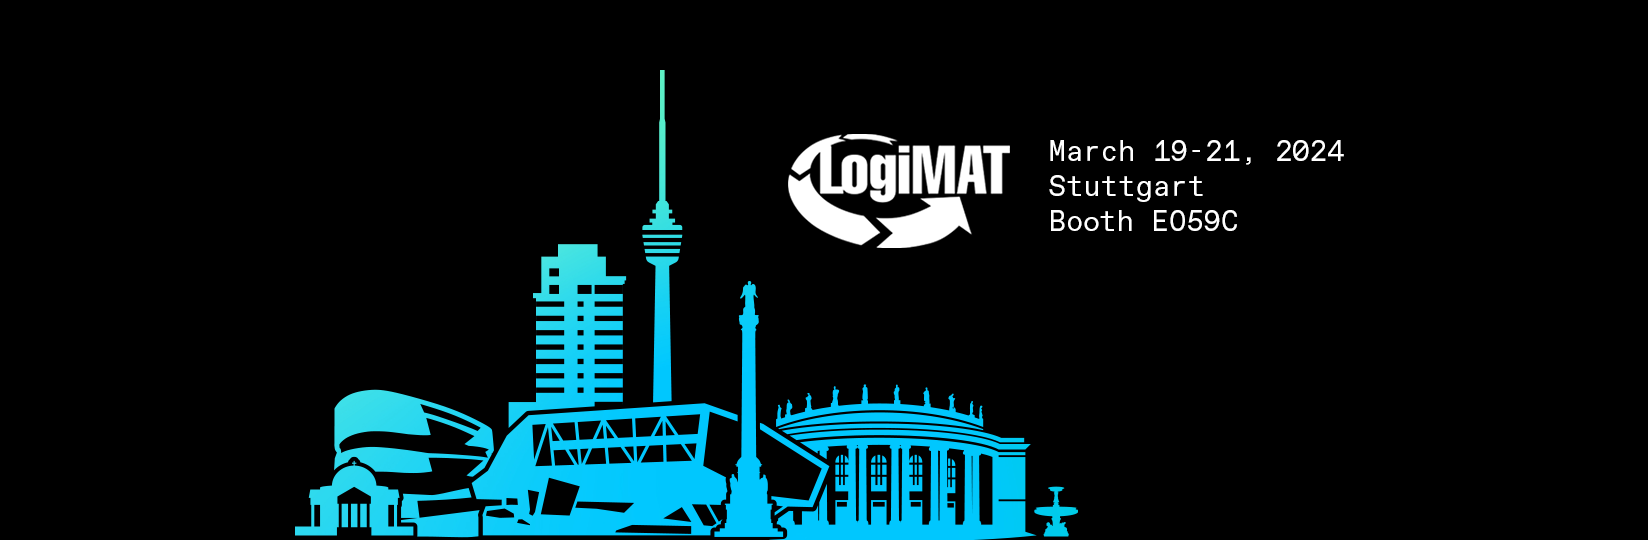 LogiMAT 2024: AR for logistics